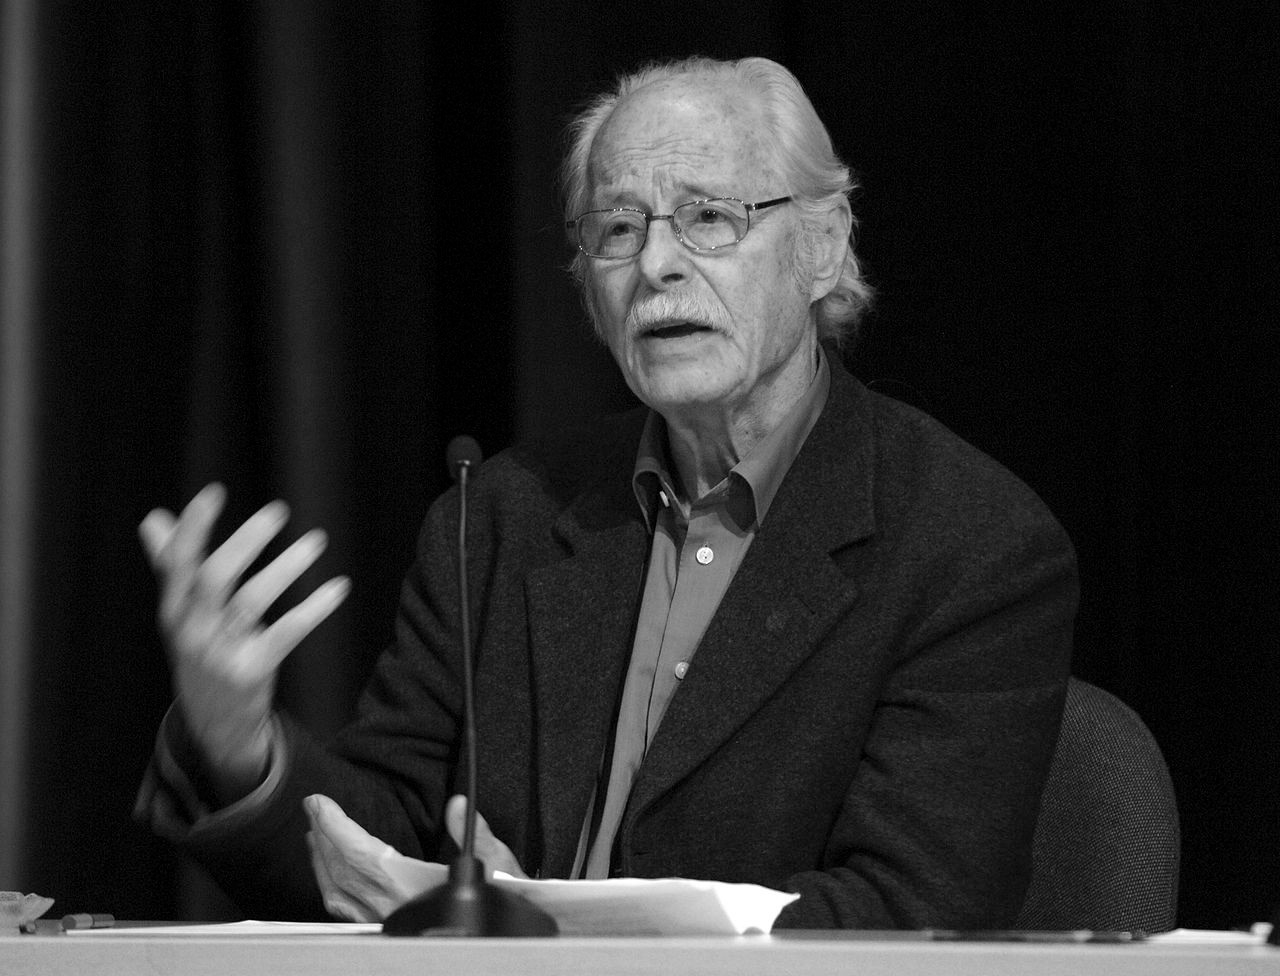 The Norwegian anthropologist Fredrik Barth